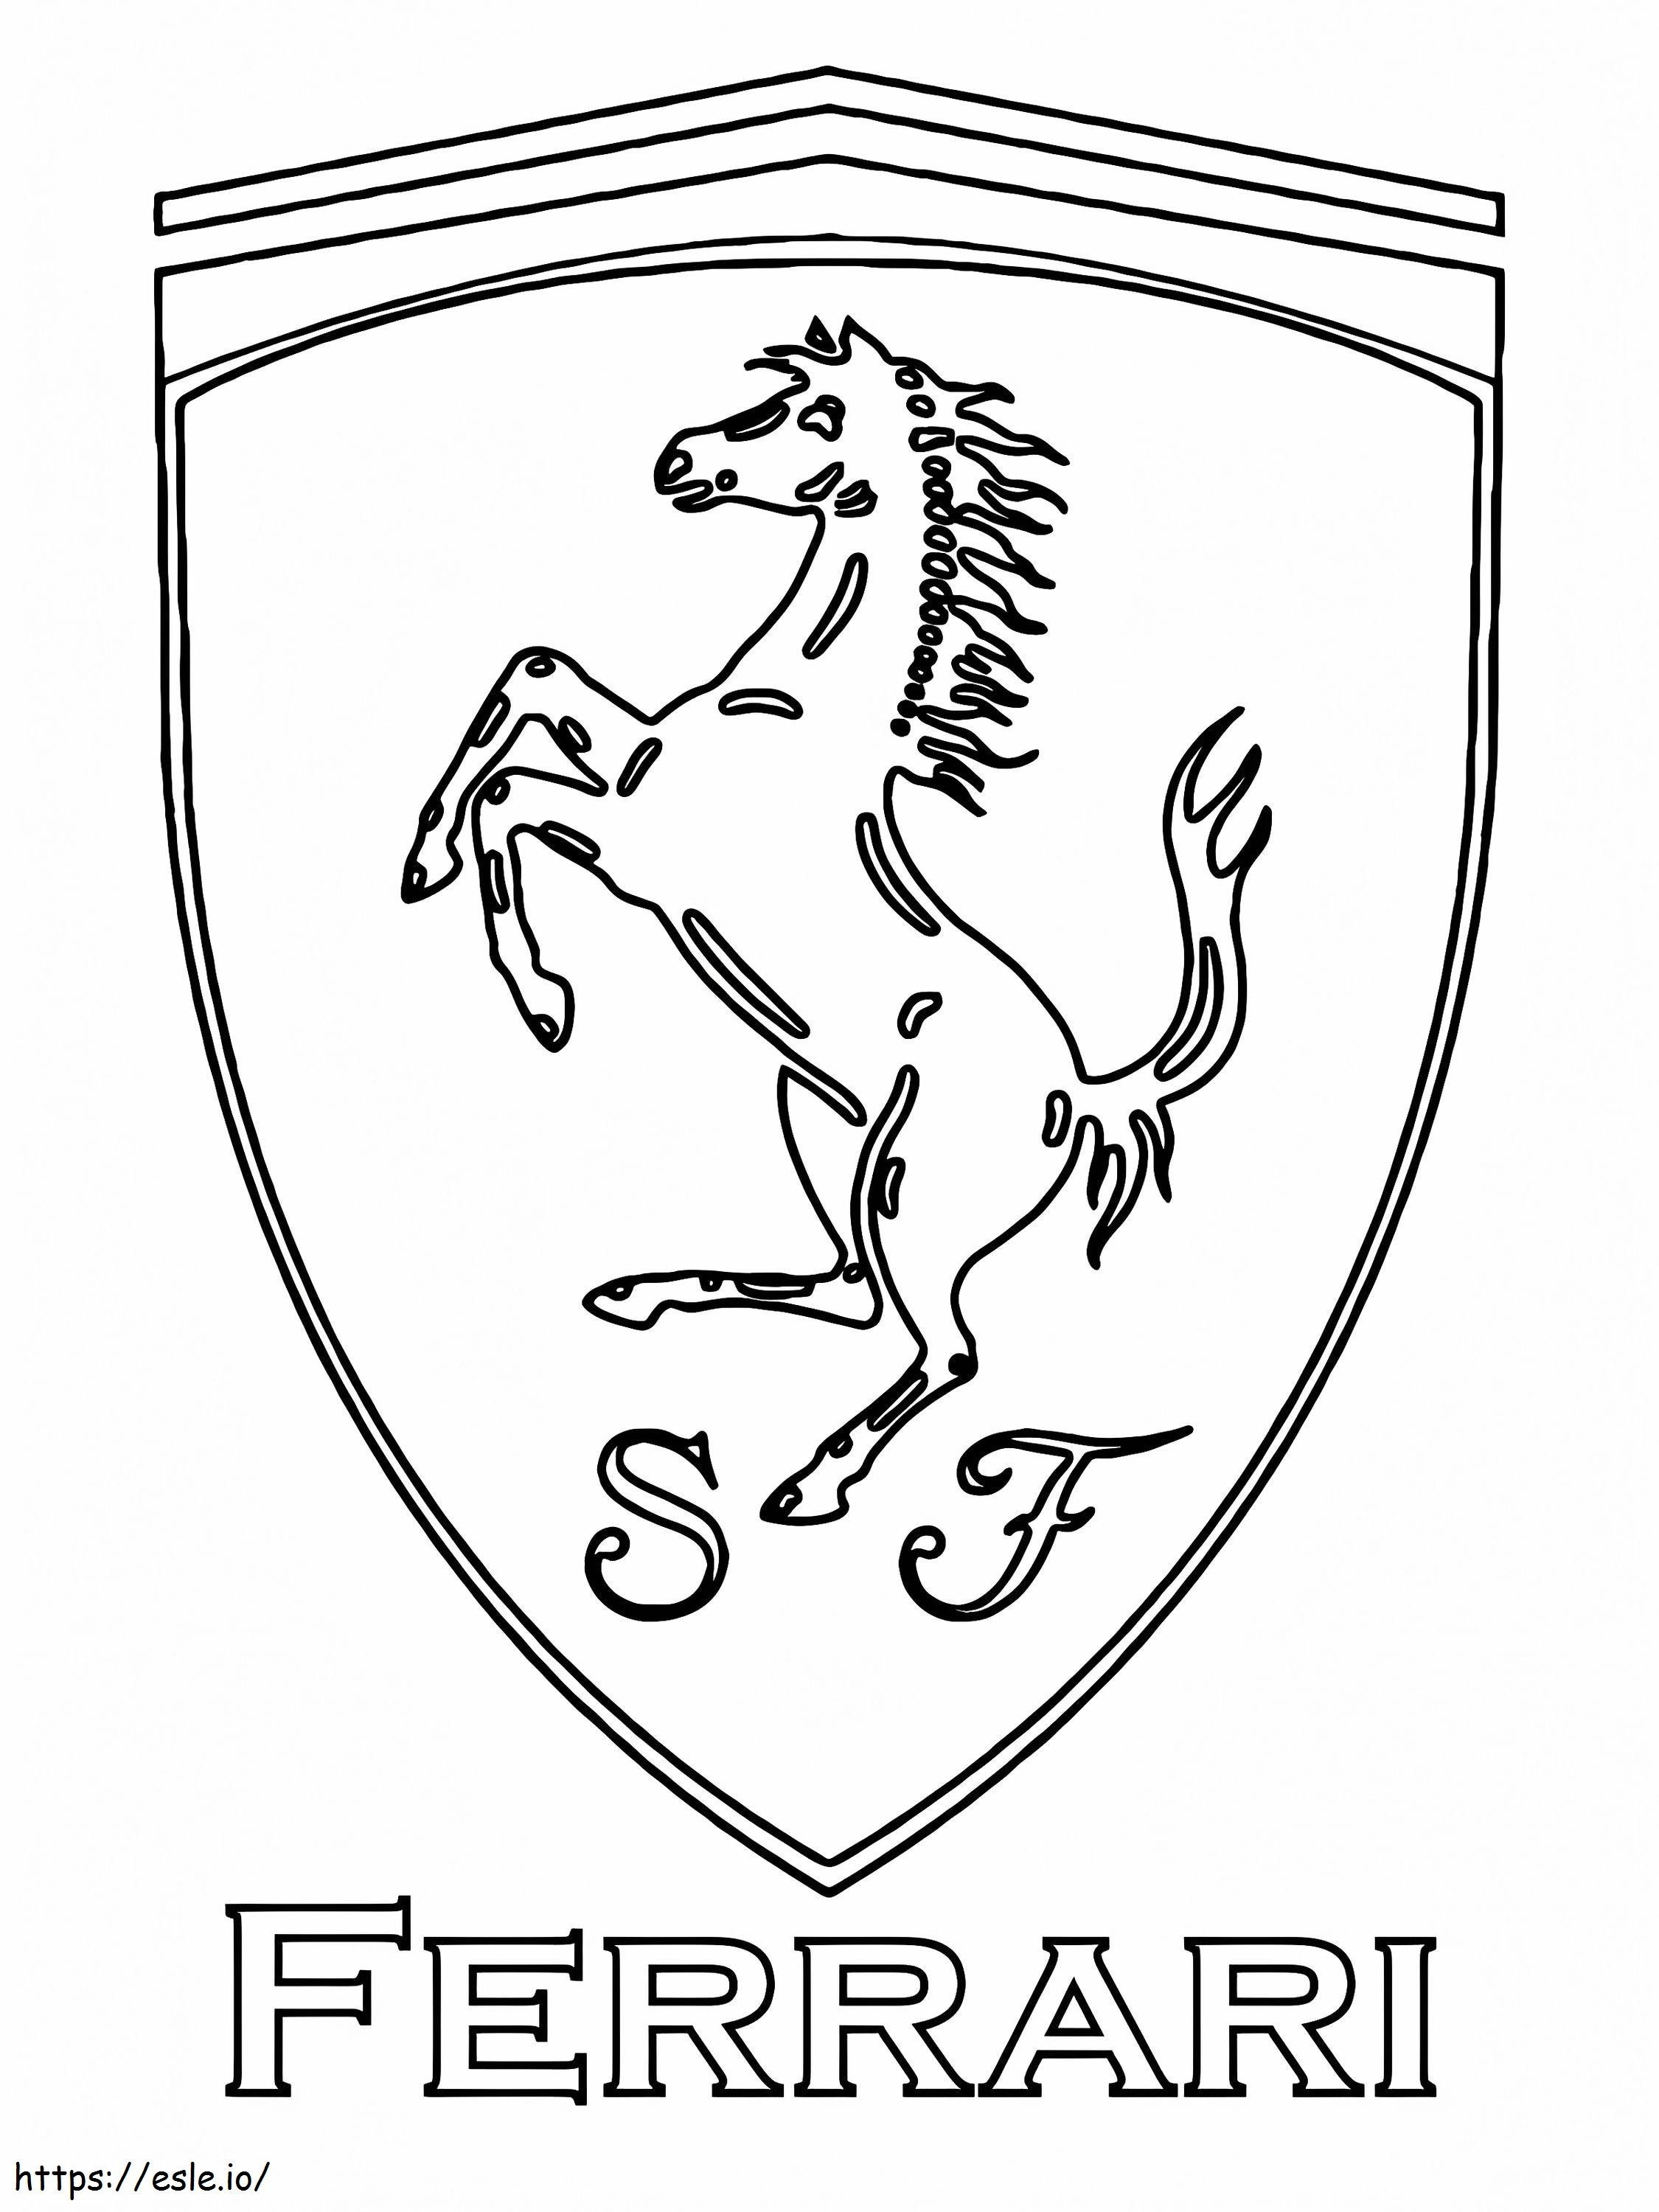 Ferrari Car Logo coloring page